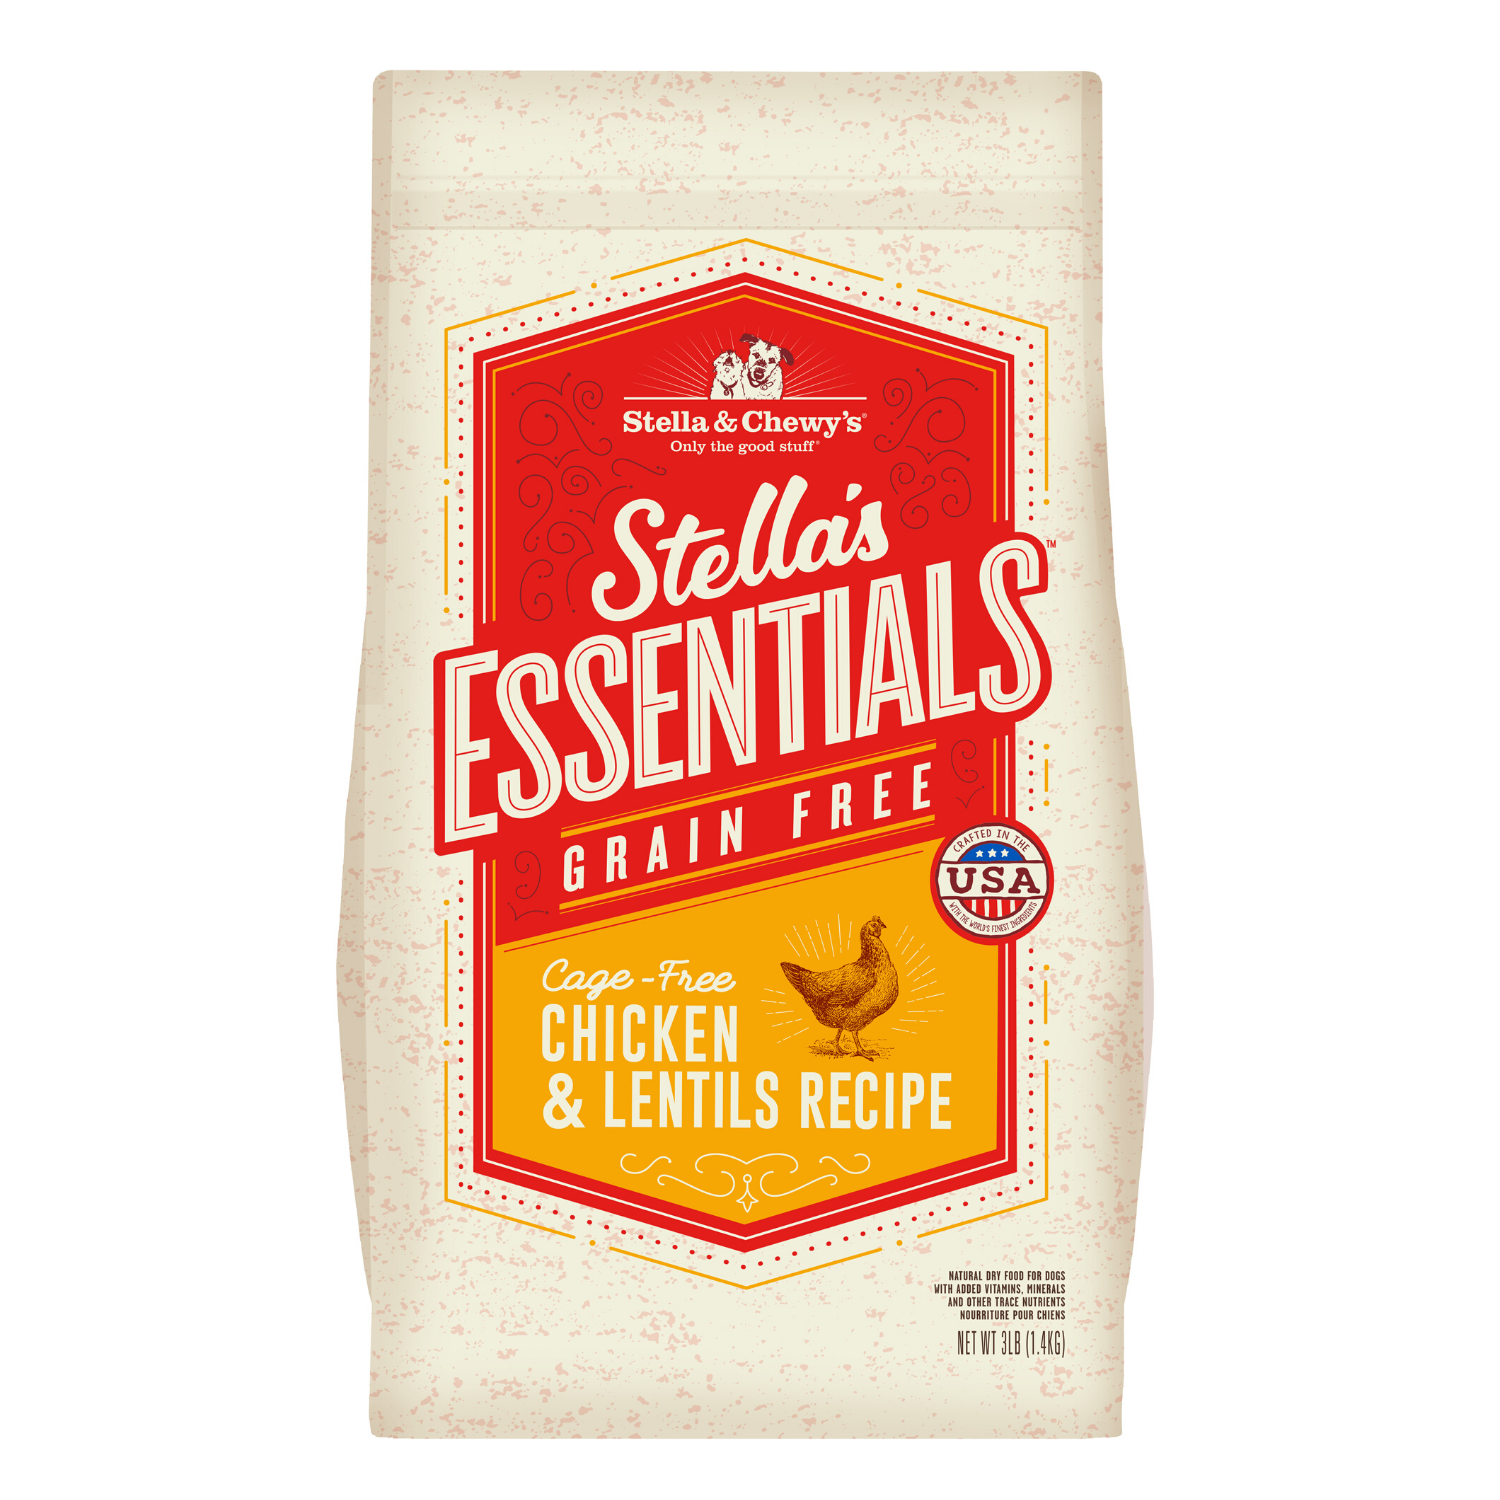 [DISCONTINUED] Stella & Chewy’s Stella's Essentials Grain Free (Cage Free Chicken and Lentils) - 1.36kg / 11.34kg